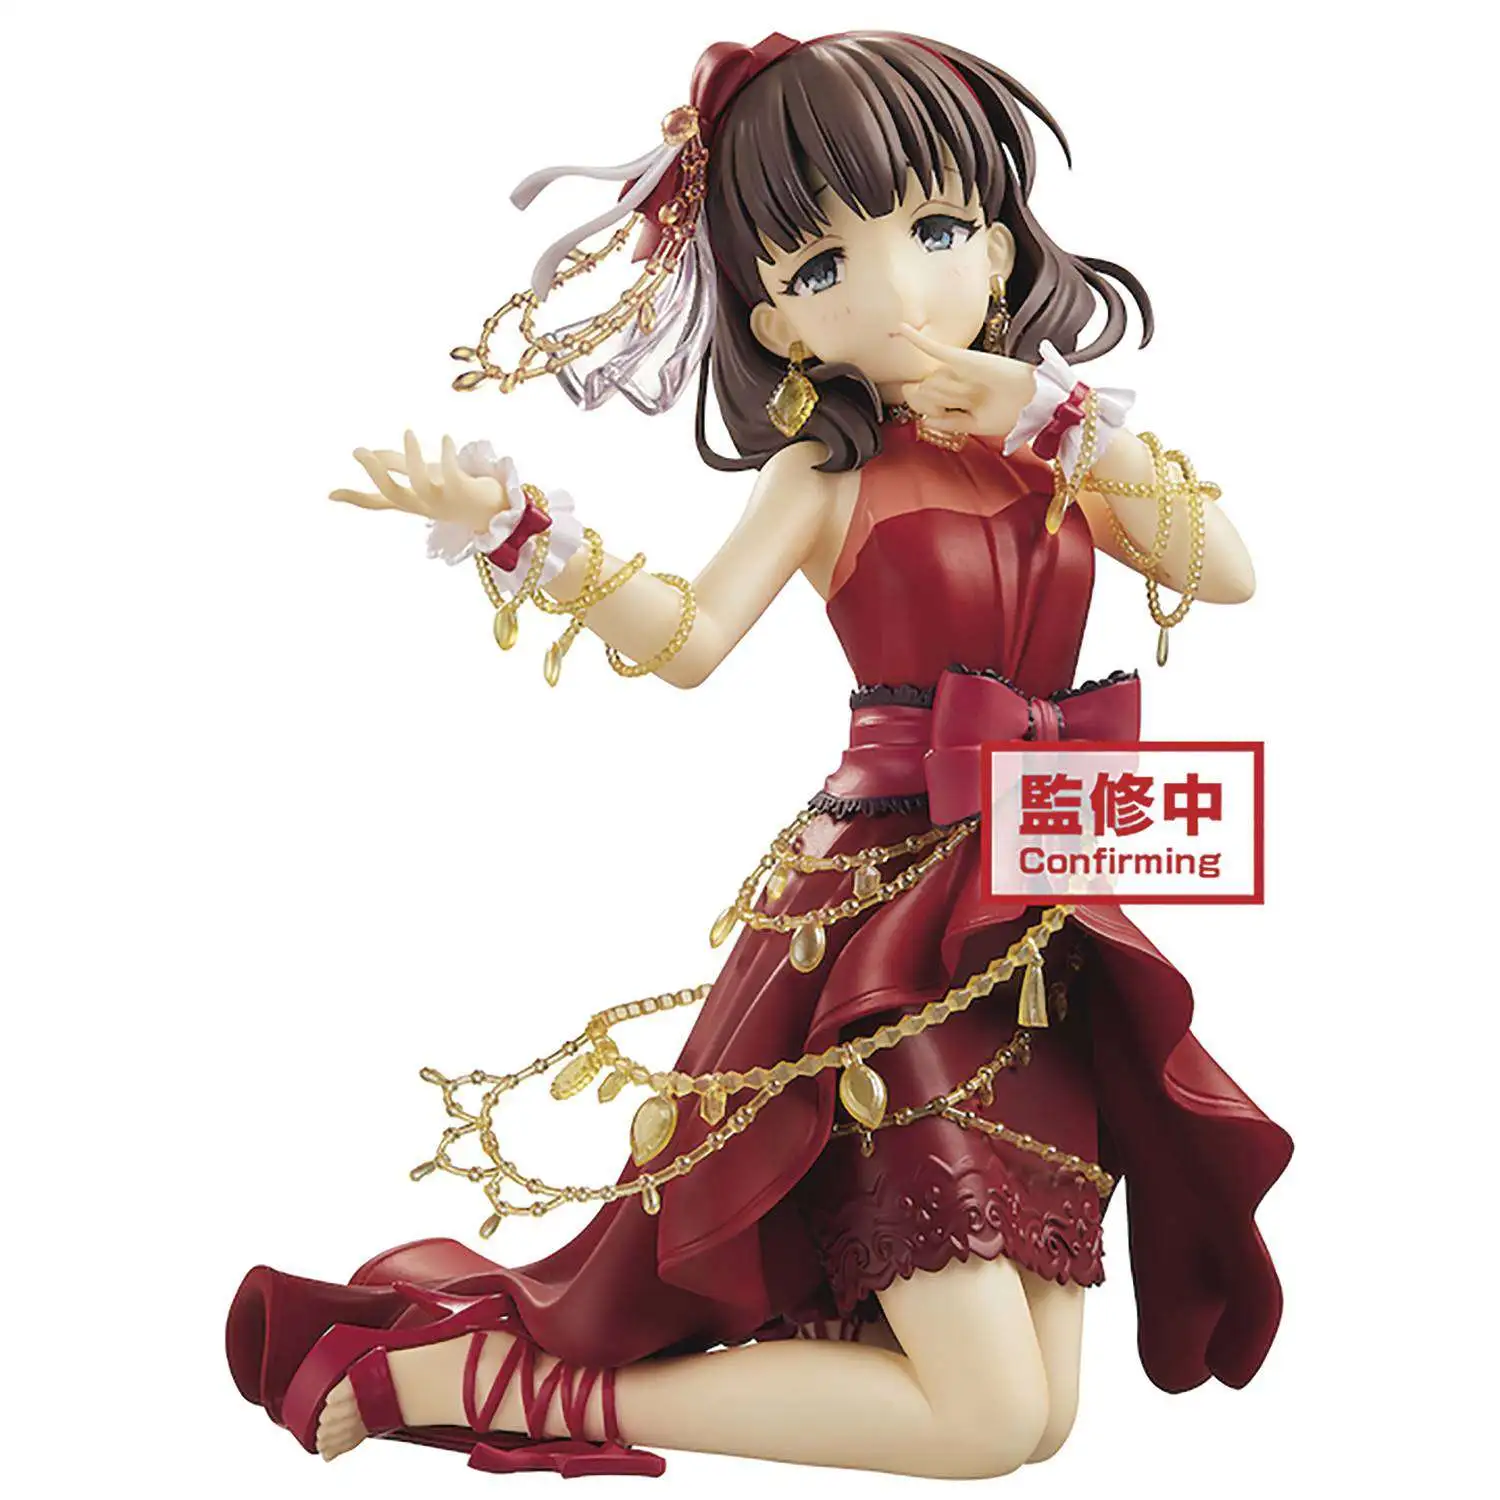 Idolmaster: Cinderella Girls Espresto Collection Mayu Sakuna 6-Inch Collectible PVC Figure